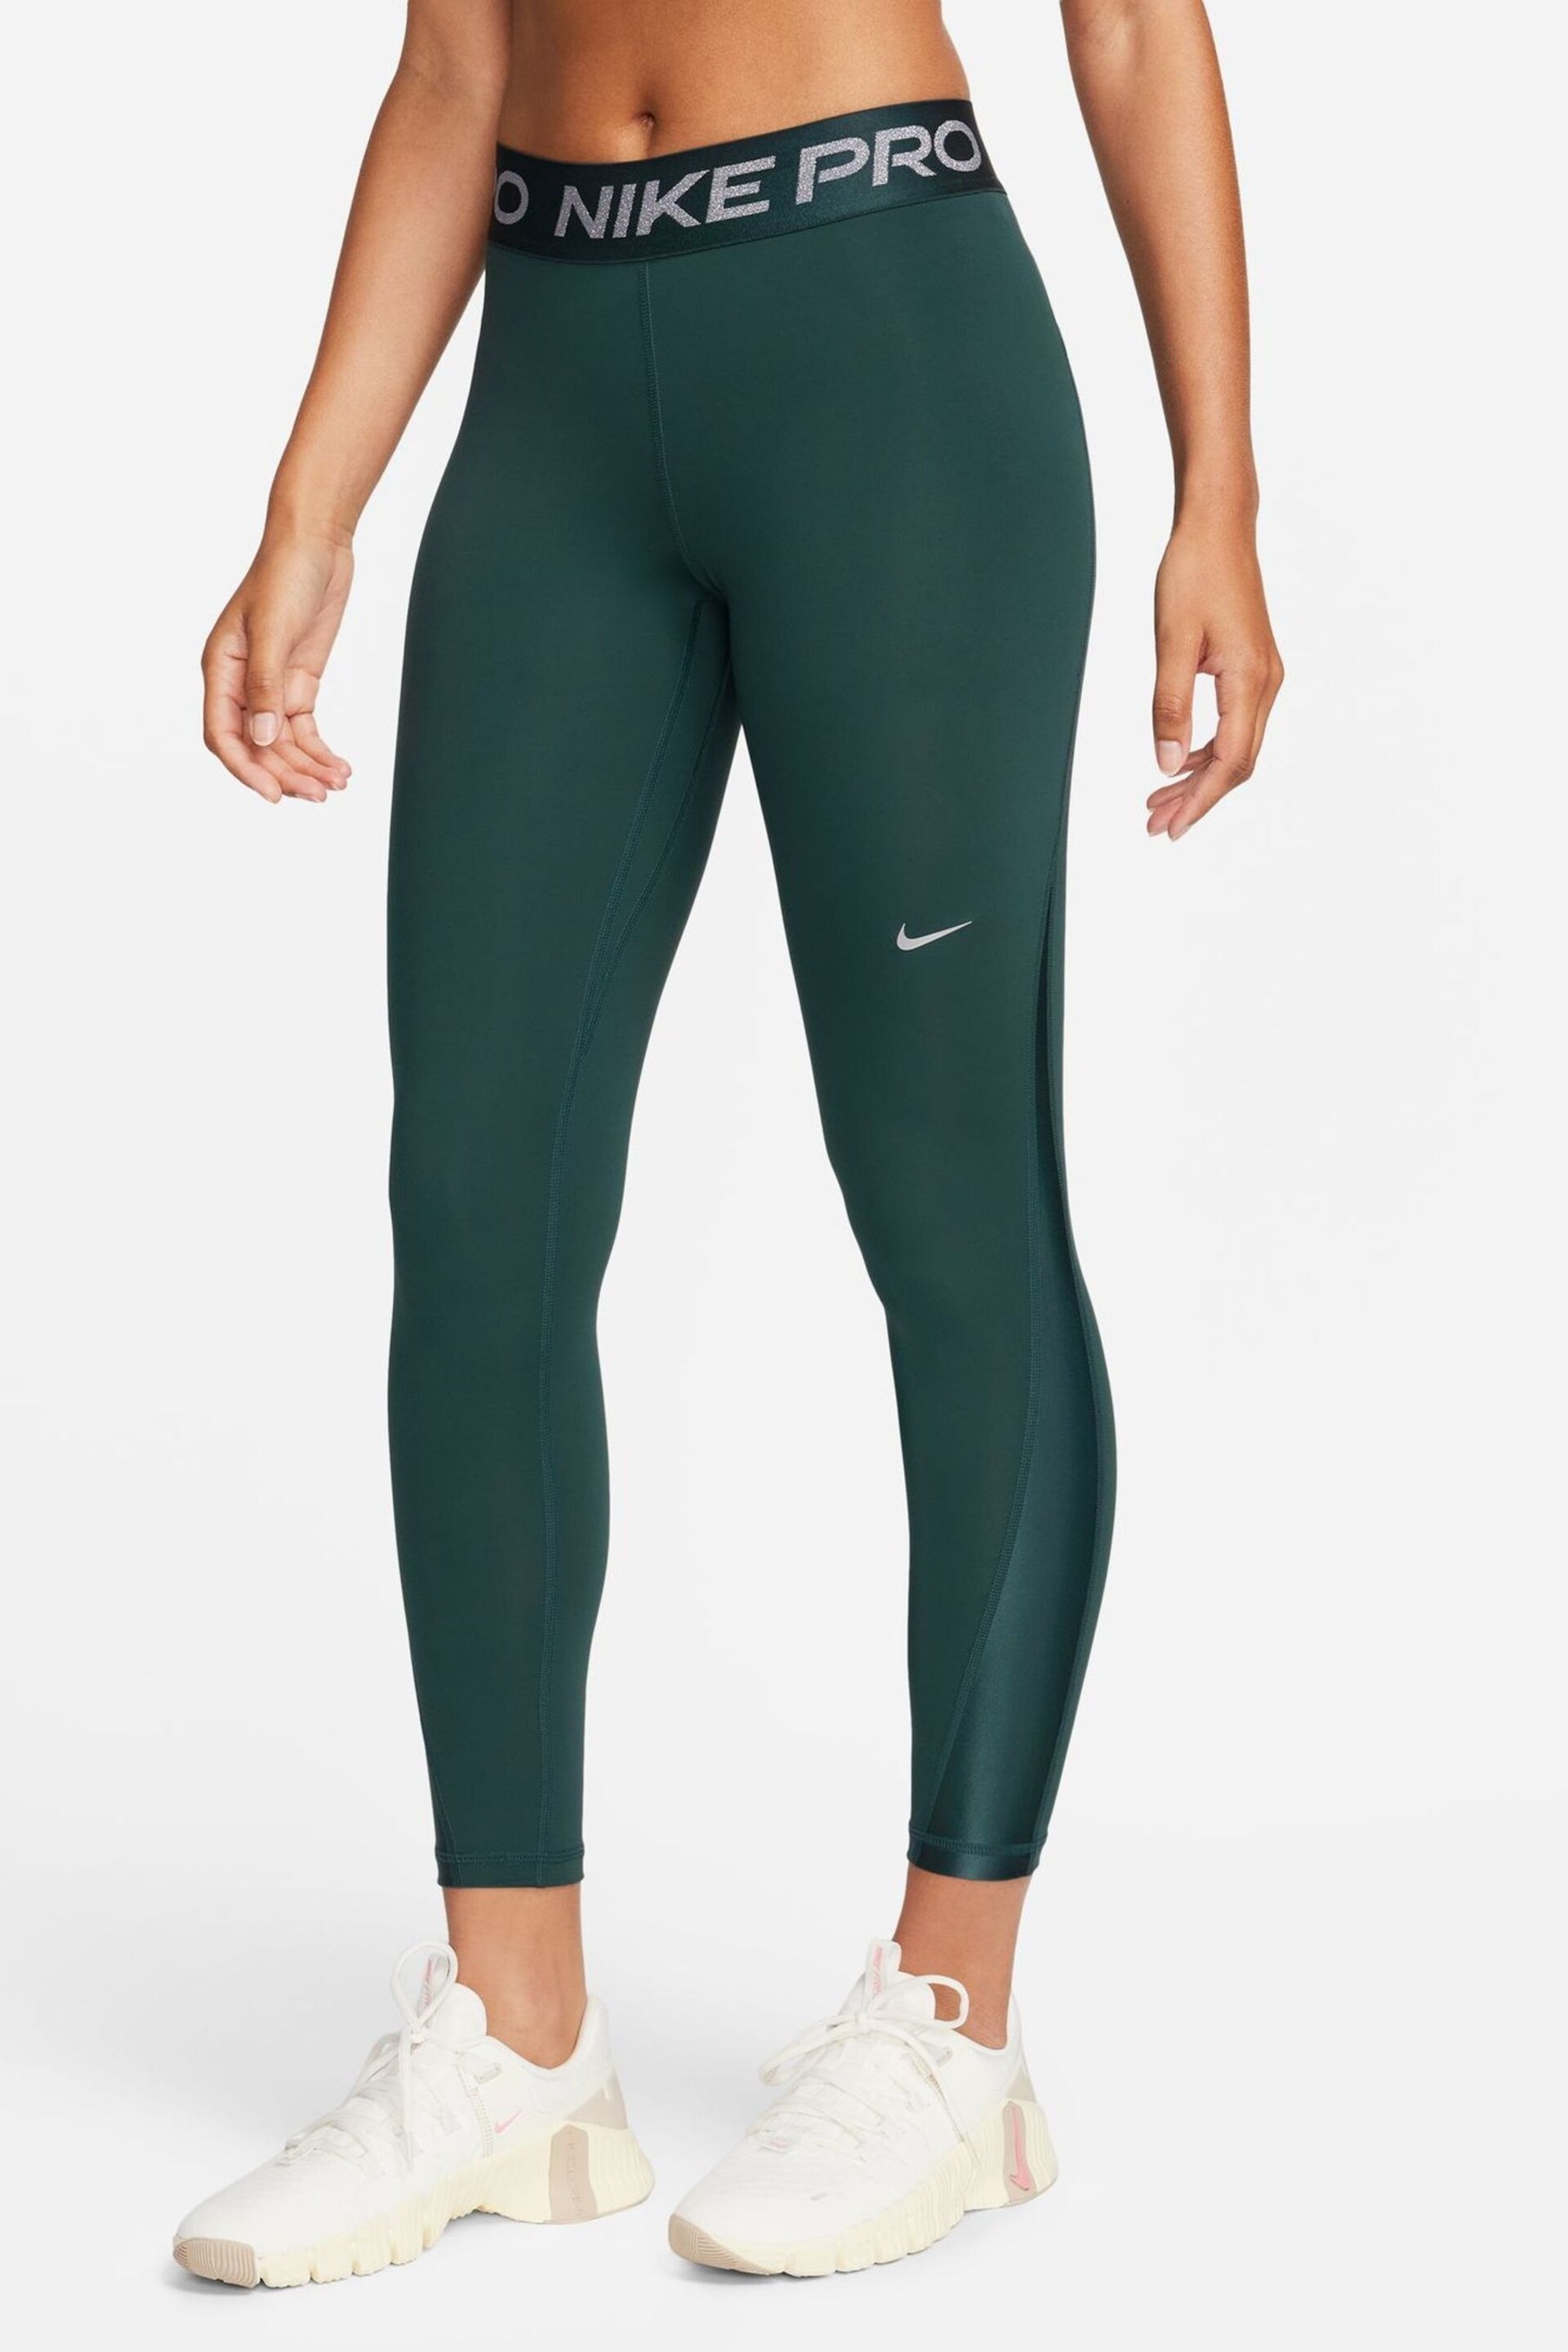 Nike Dark Green Metallic Pro Mid-Rise 7/8 Leggings - Image 1 of 1